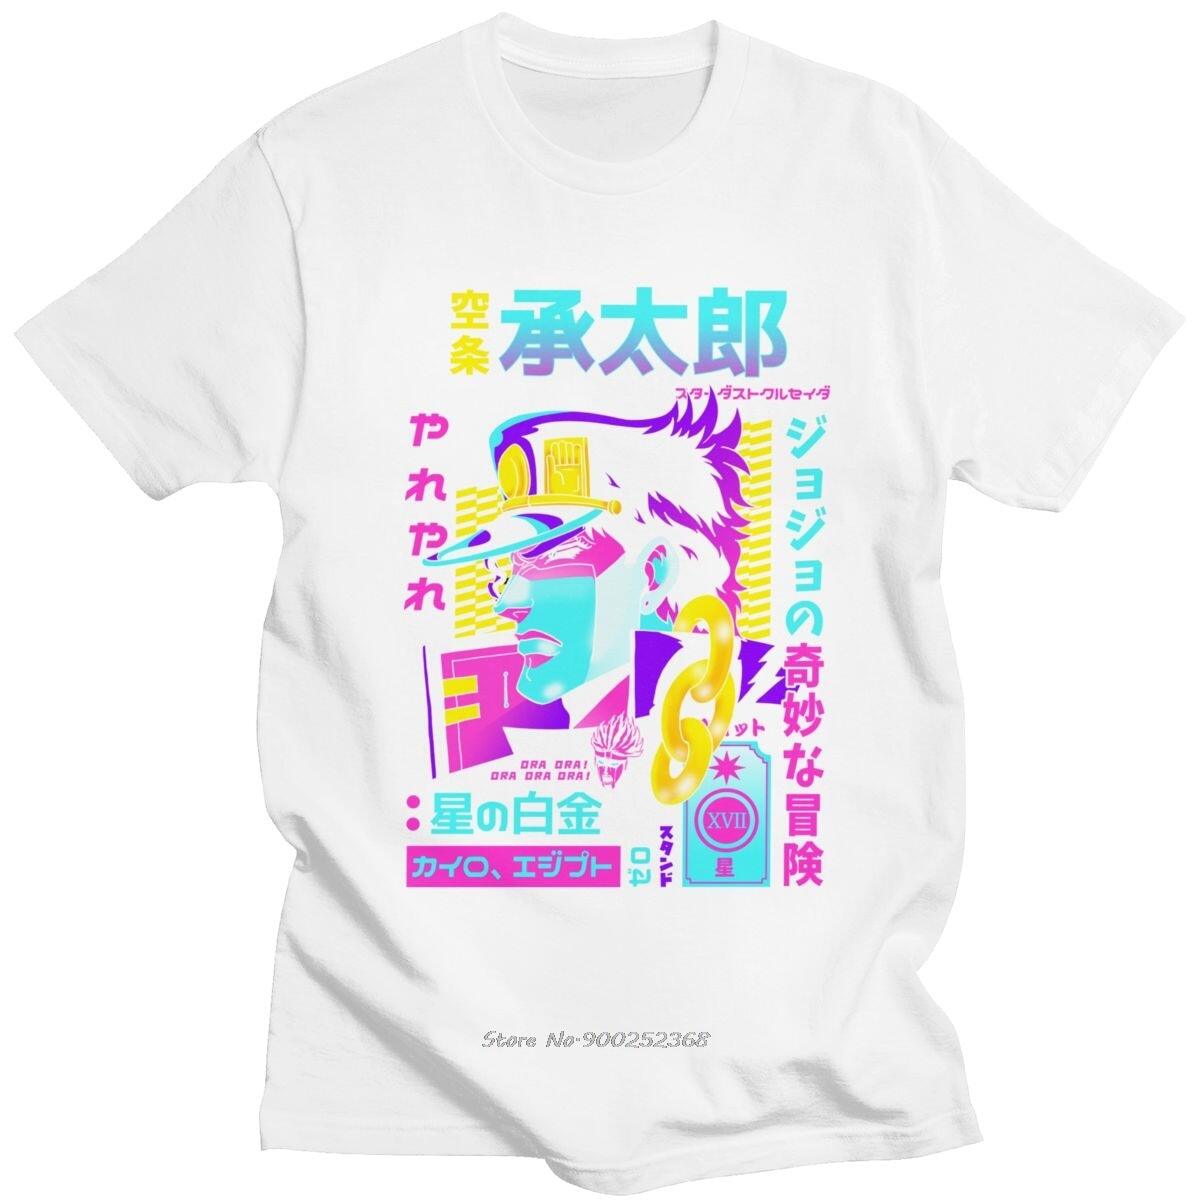 Fashion Jojo Bizarre Adventure T Shirt Men Short Sleeved Vaporwave Aesthetic Jotaro T-shirt Cotton Kujo Manga Graphic Tee Tops